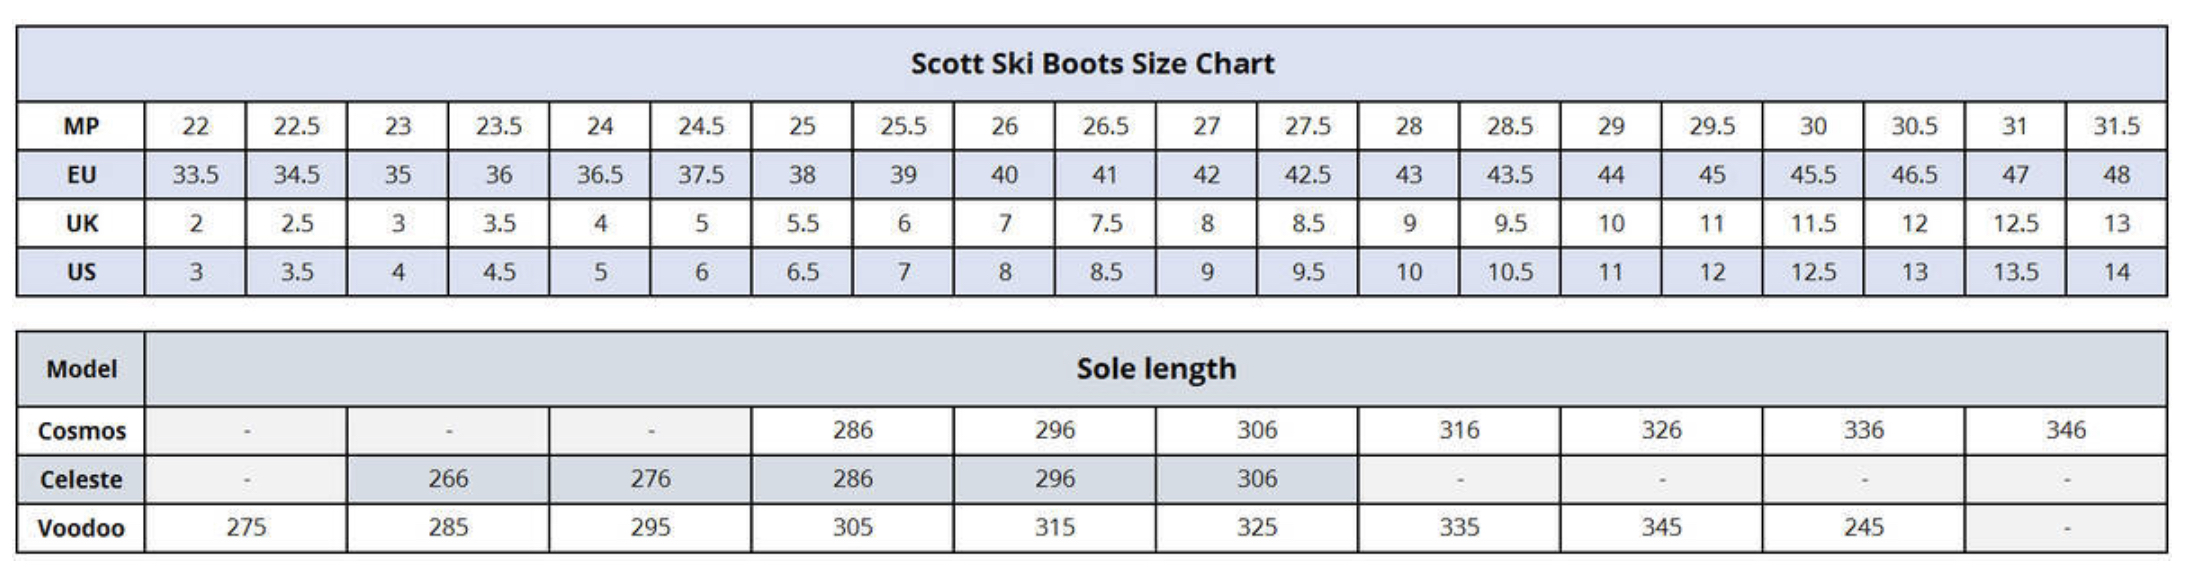 37 mm ski boot size